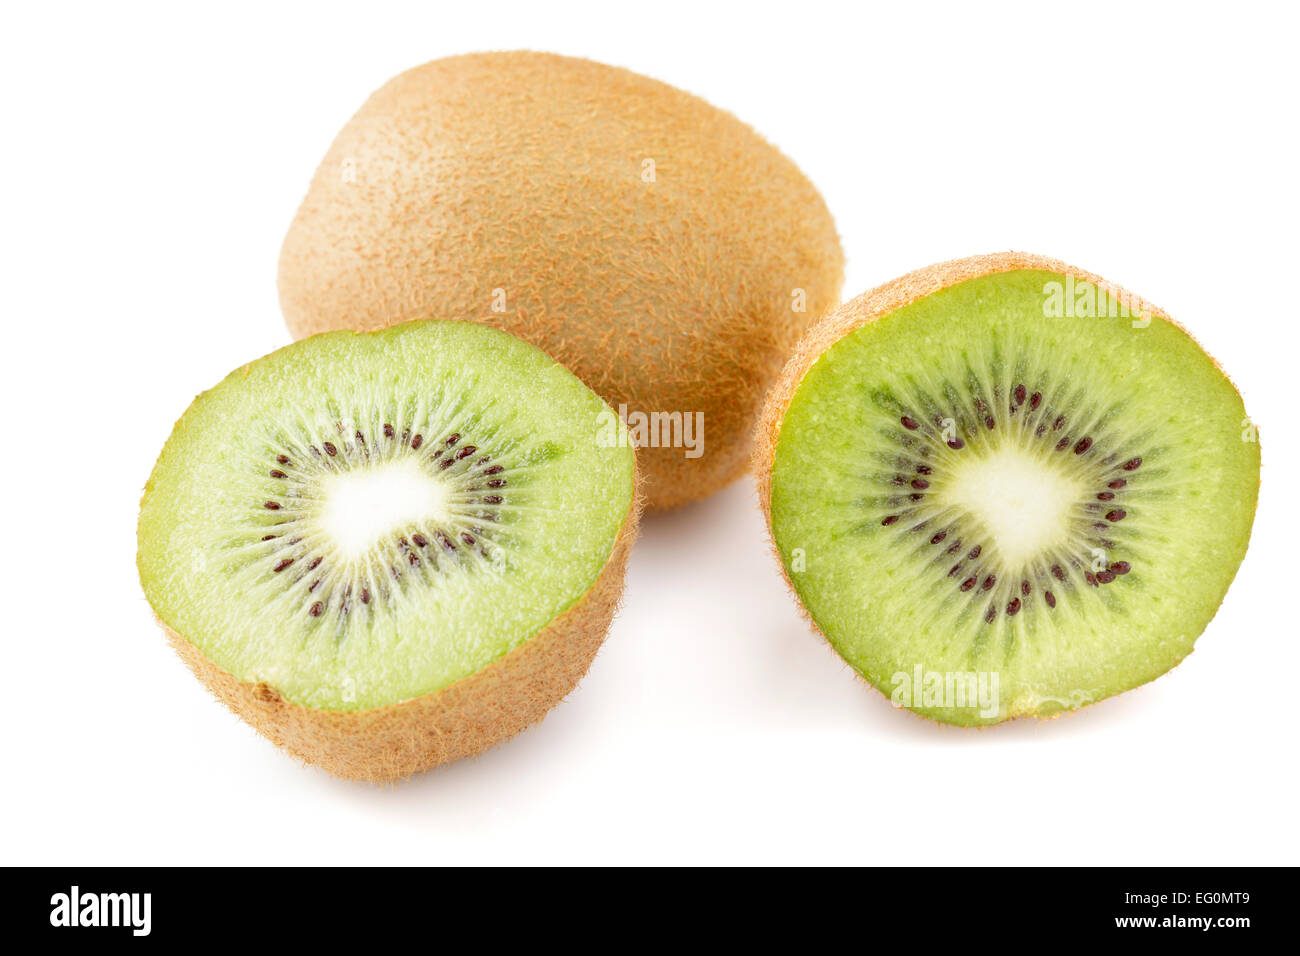 Kiwi fruits whole and half Stock Photo